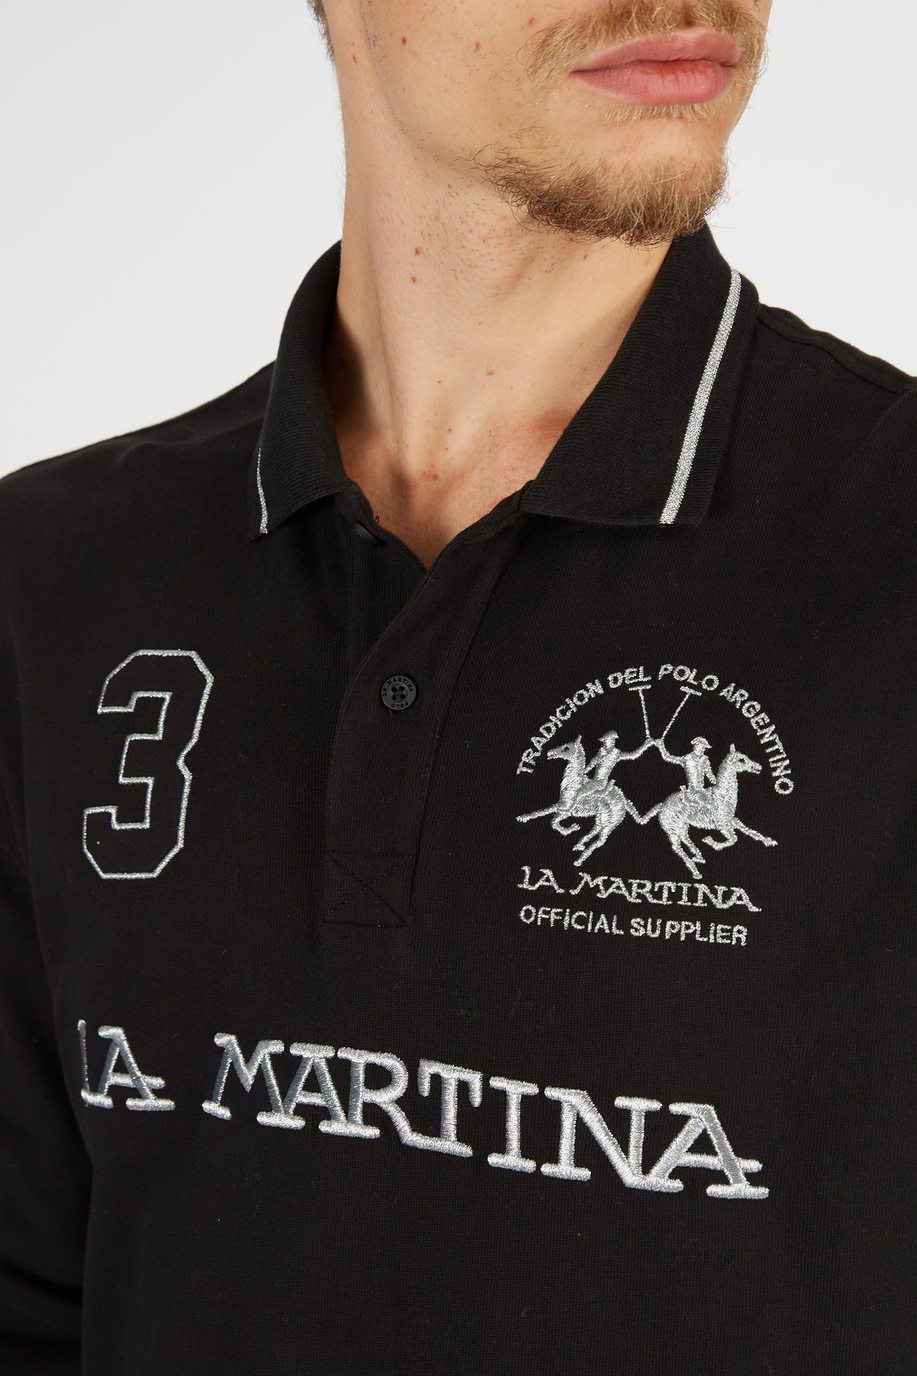 Herren-Poloshirt aus Baumwolle mit langen Ärmeln - Regular fit | La Martina - Official Online Shop